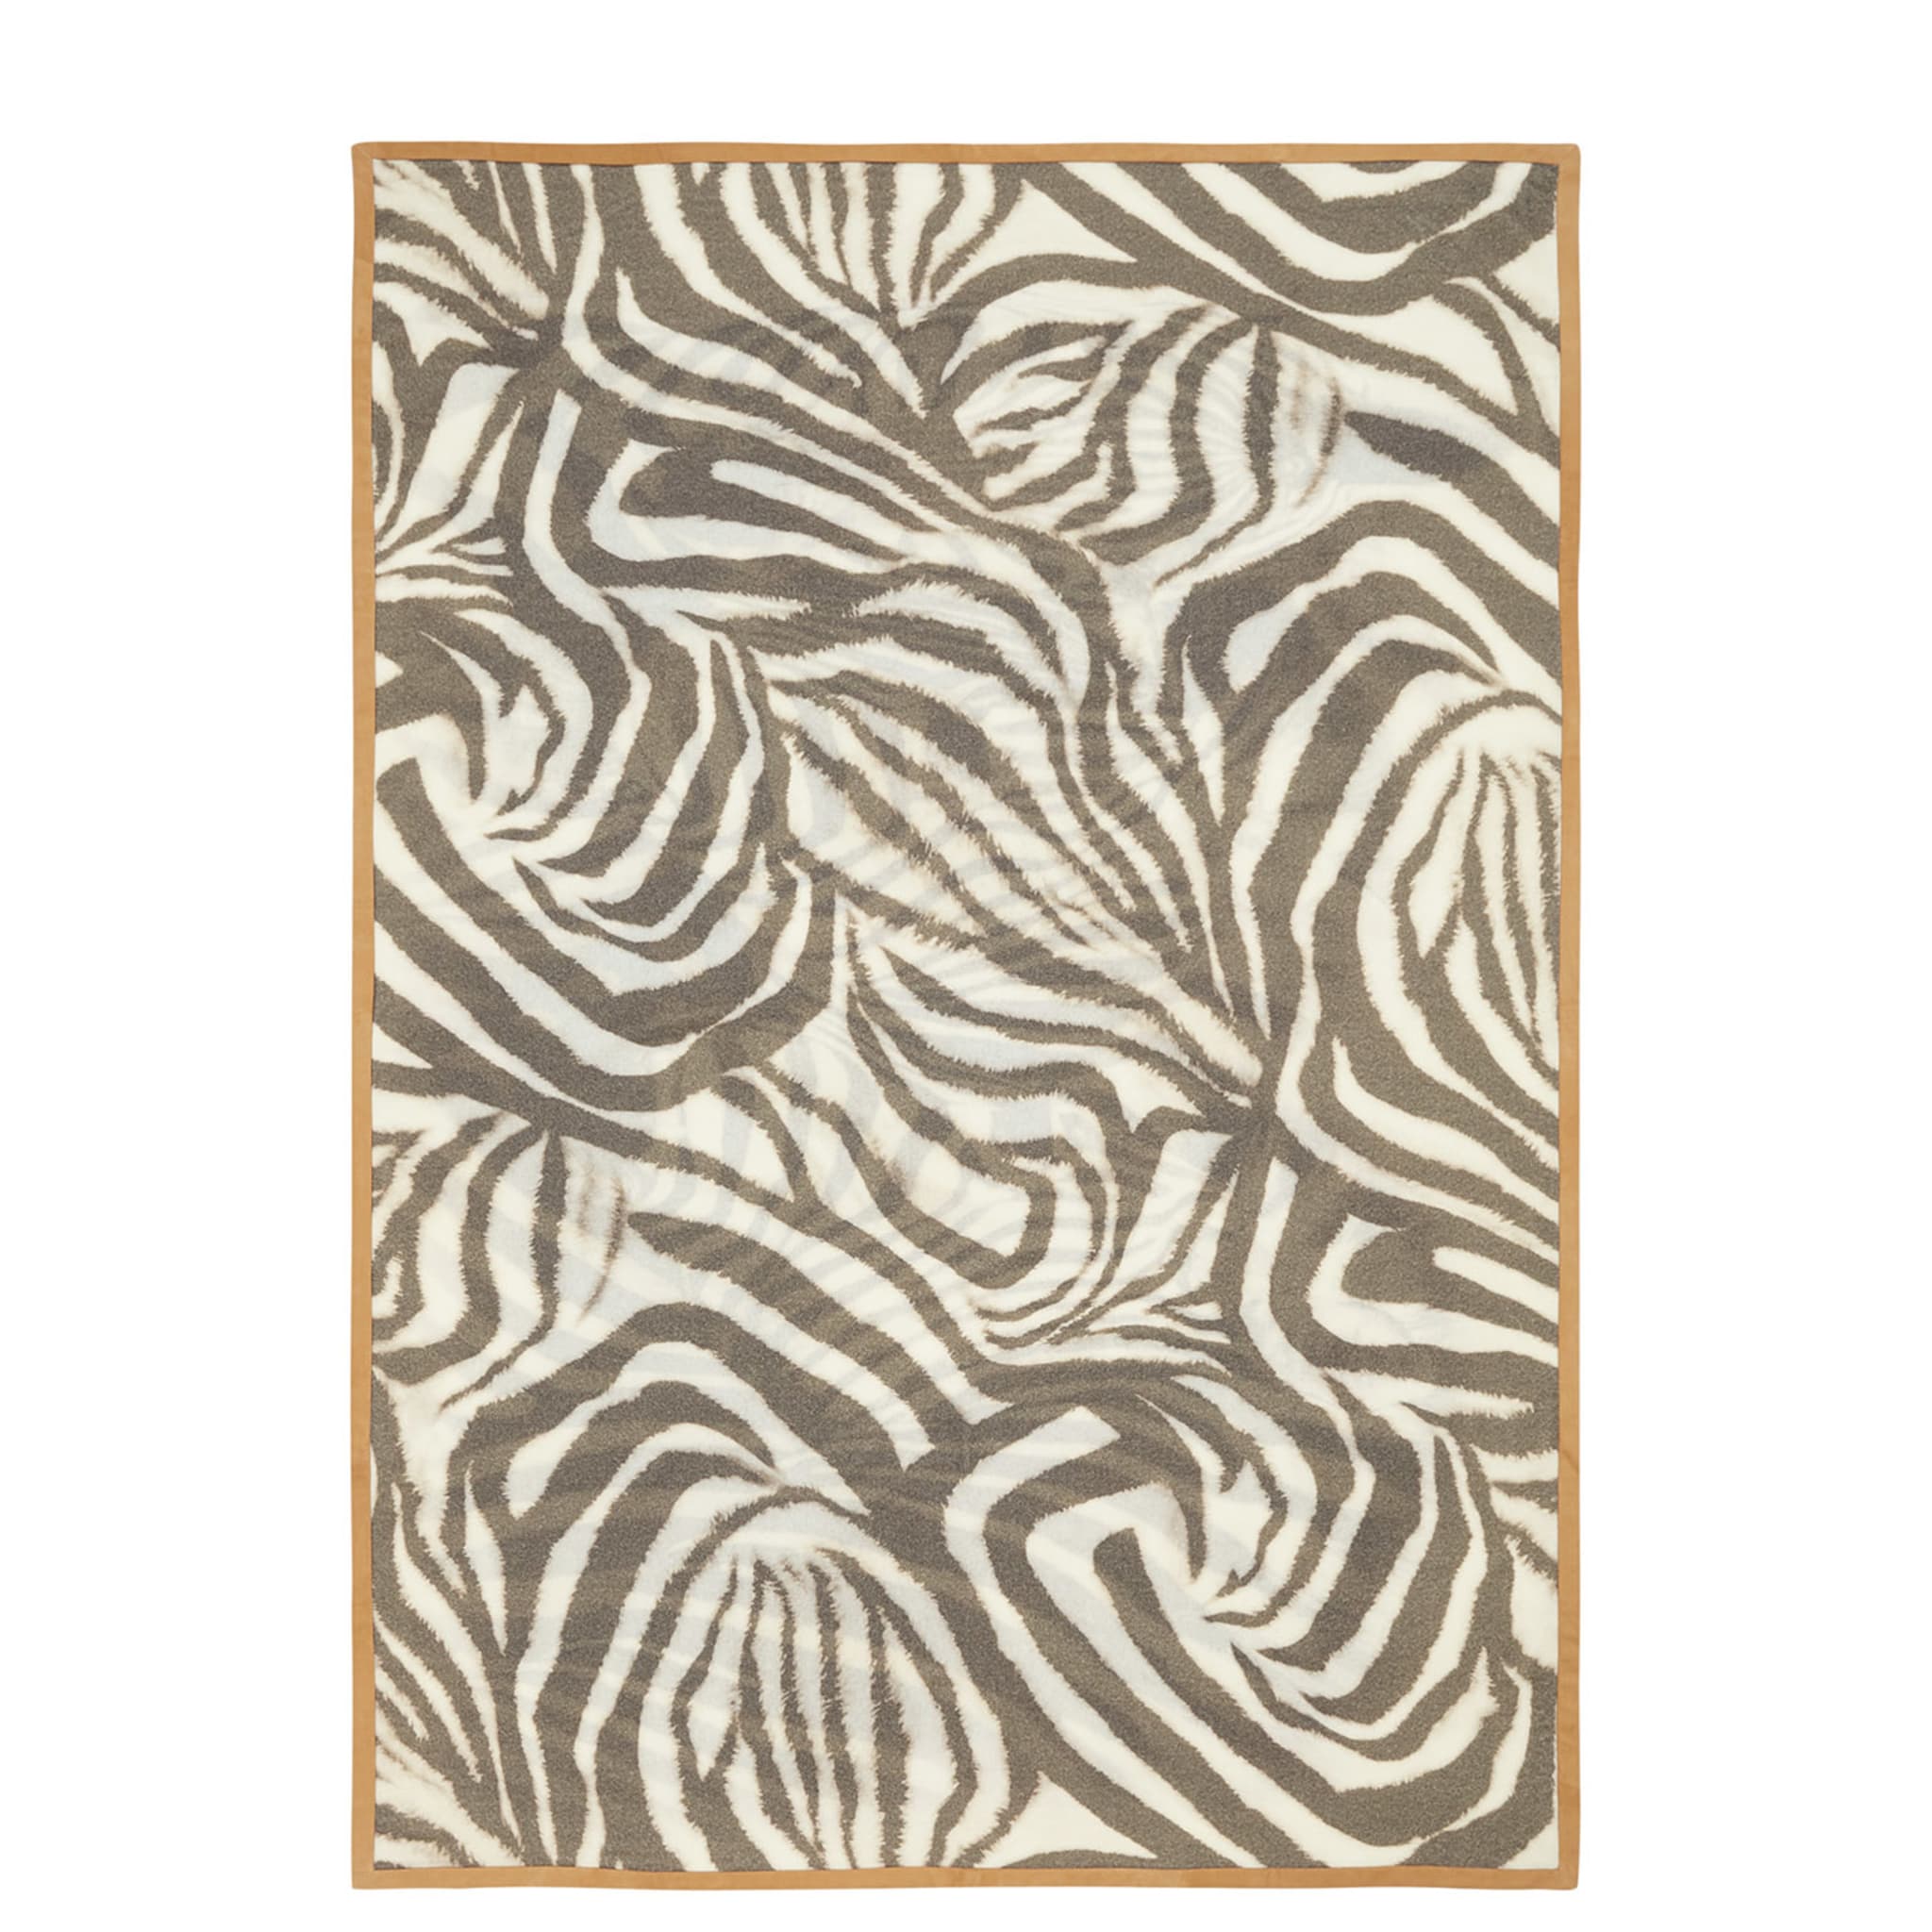 Zebra Suede-Hemmed Patterned Small Blanket - Alternative view 1